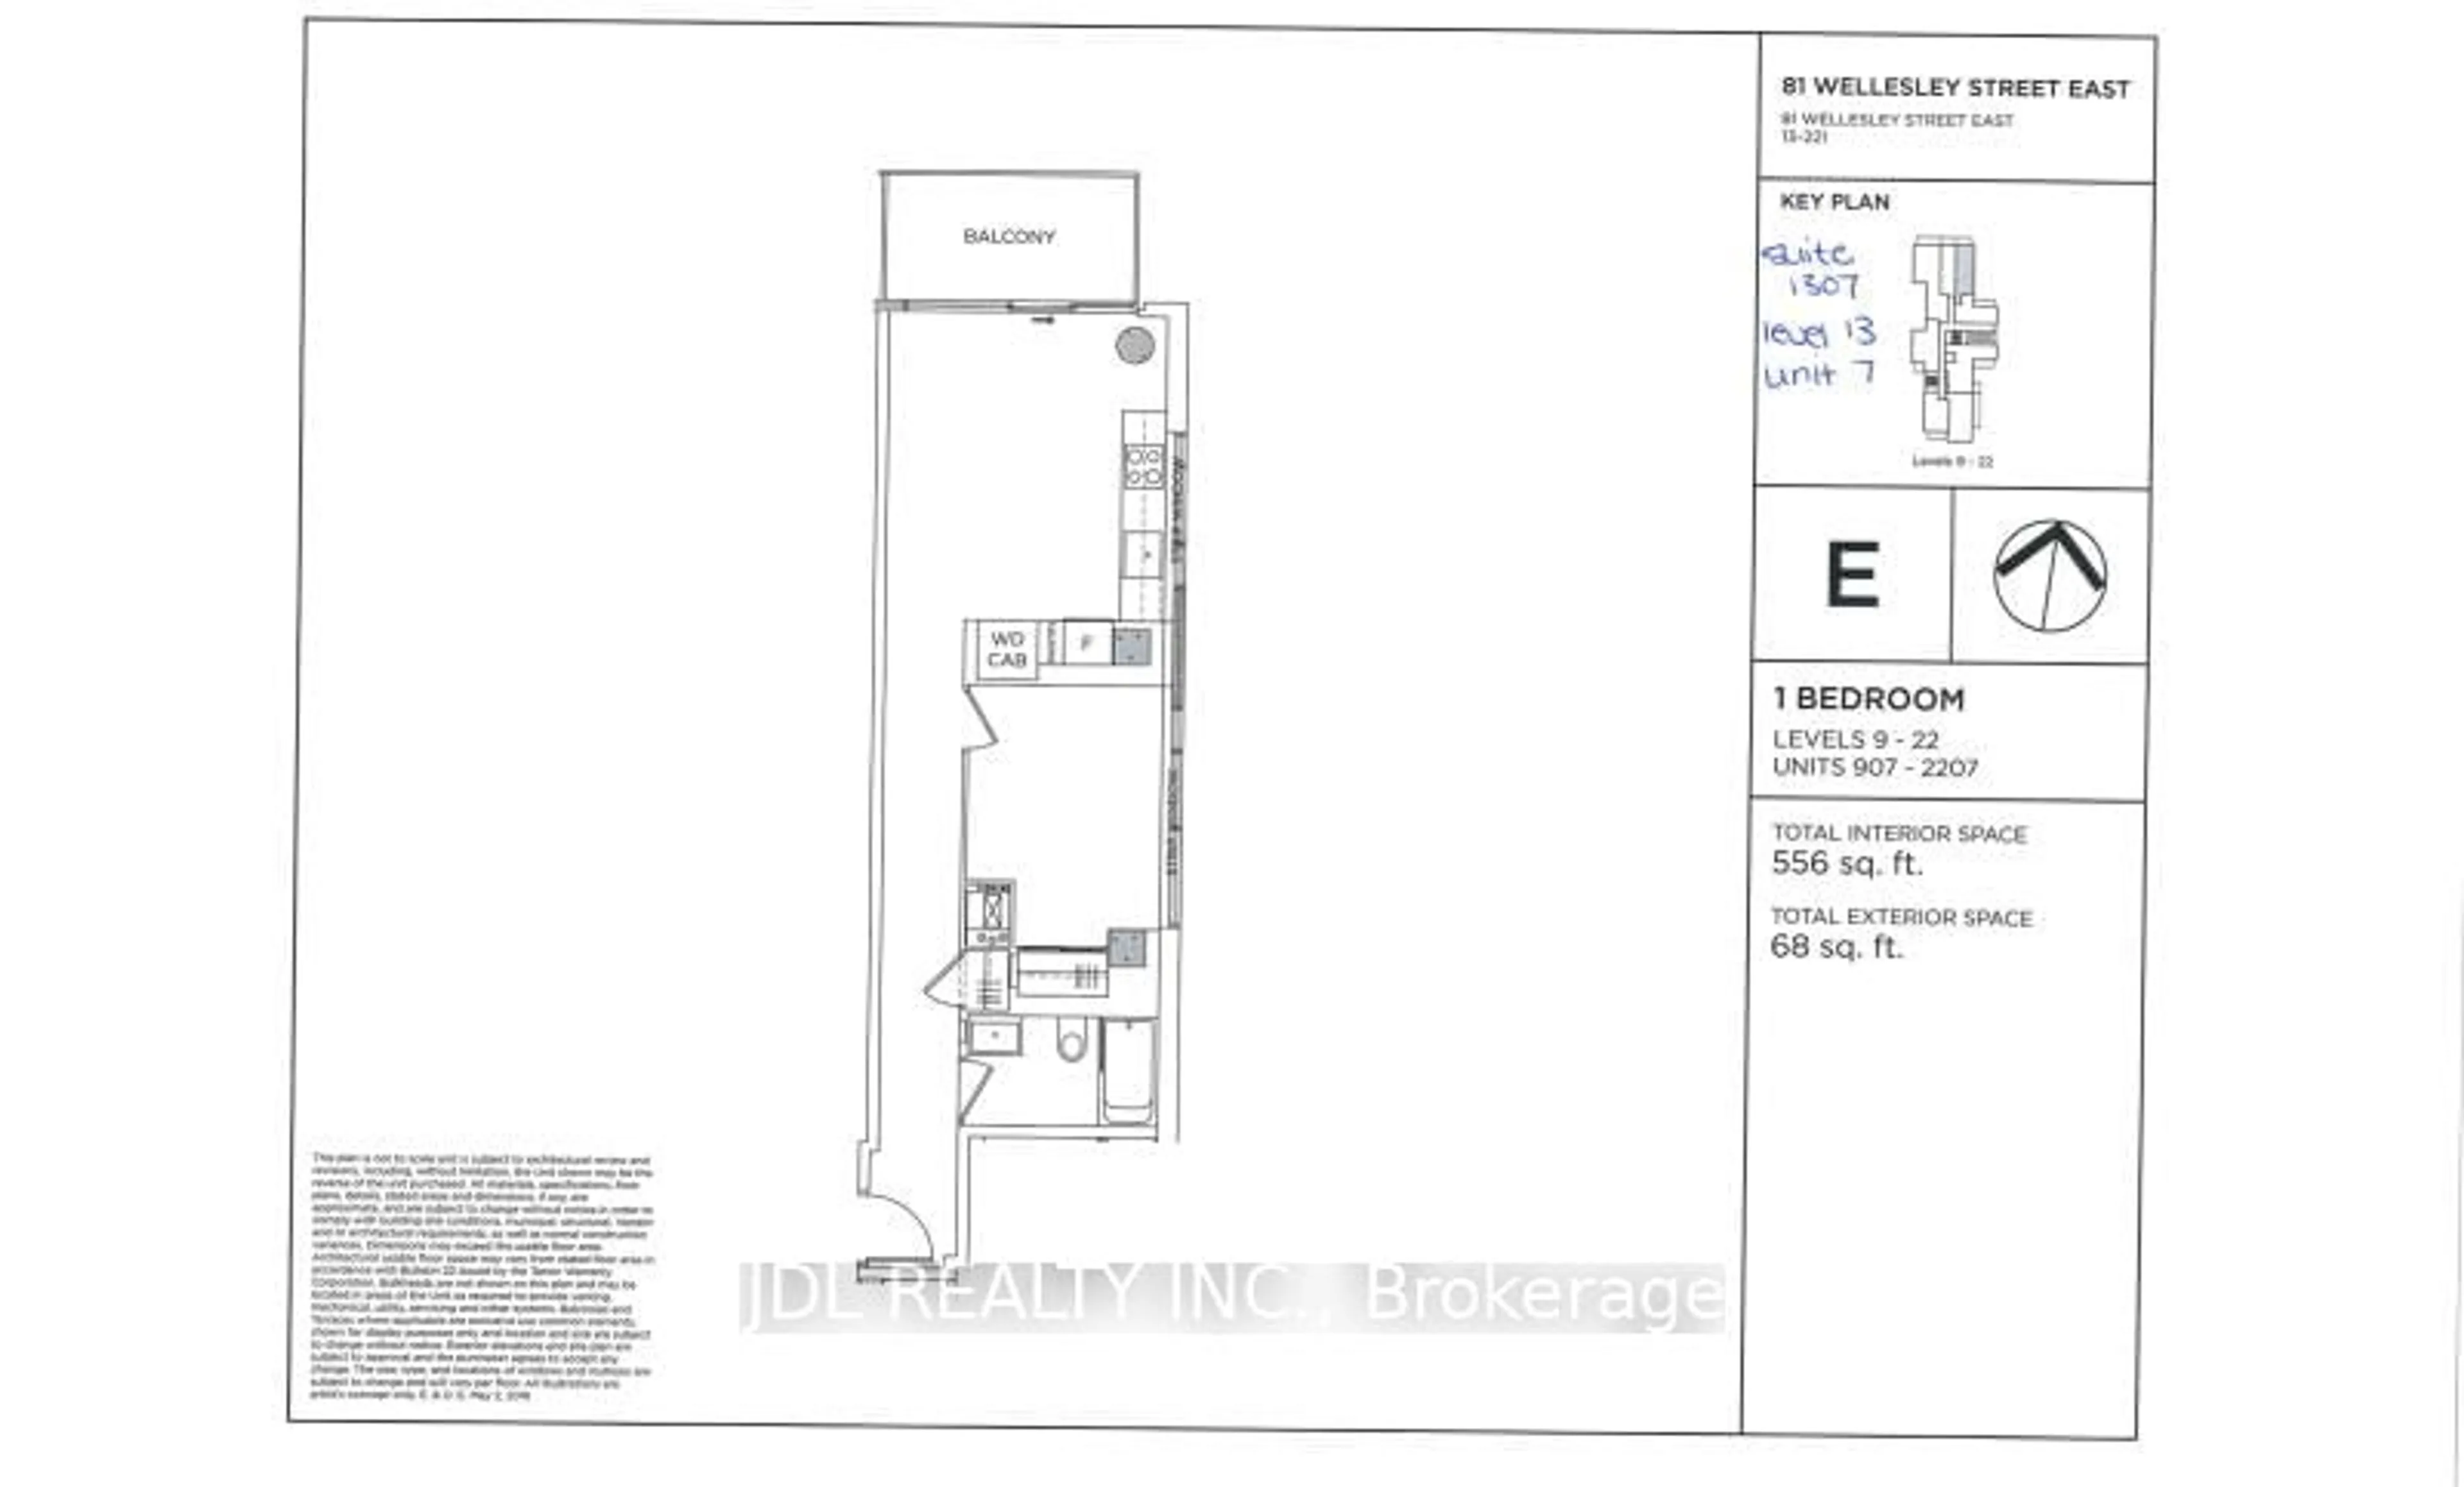 Floor plan for 81 Wellesley St #1307, Toronto Ontario M4Y 0C5